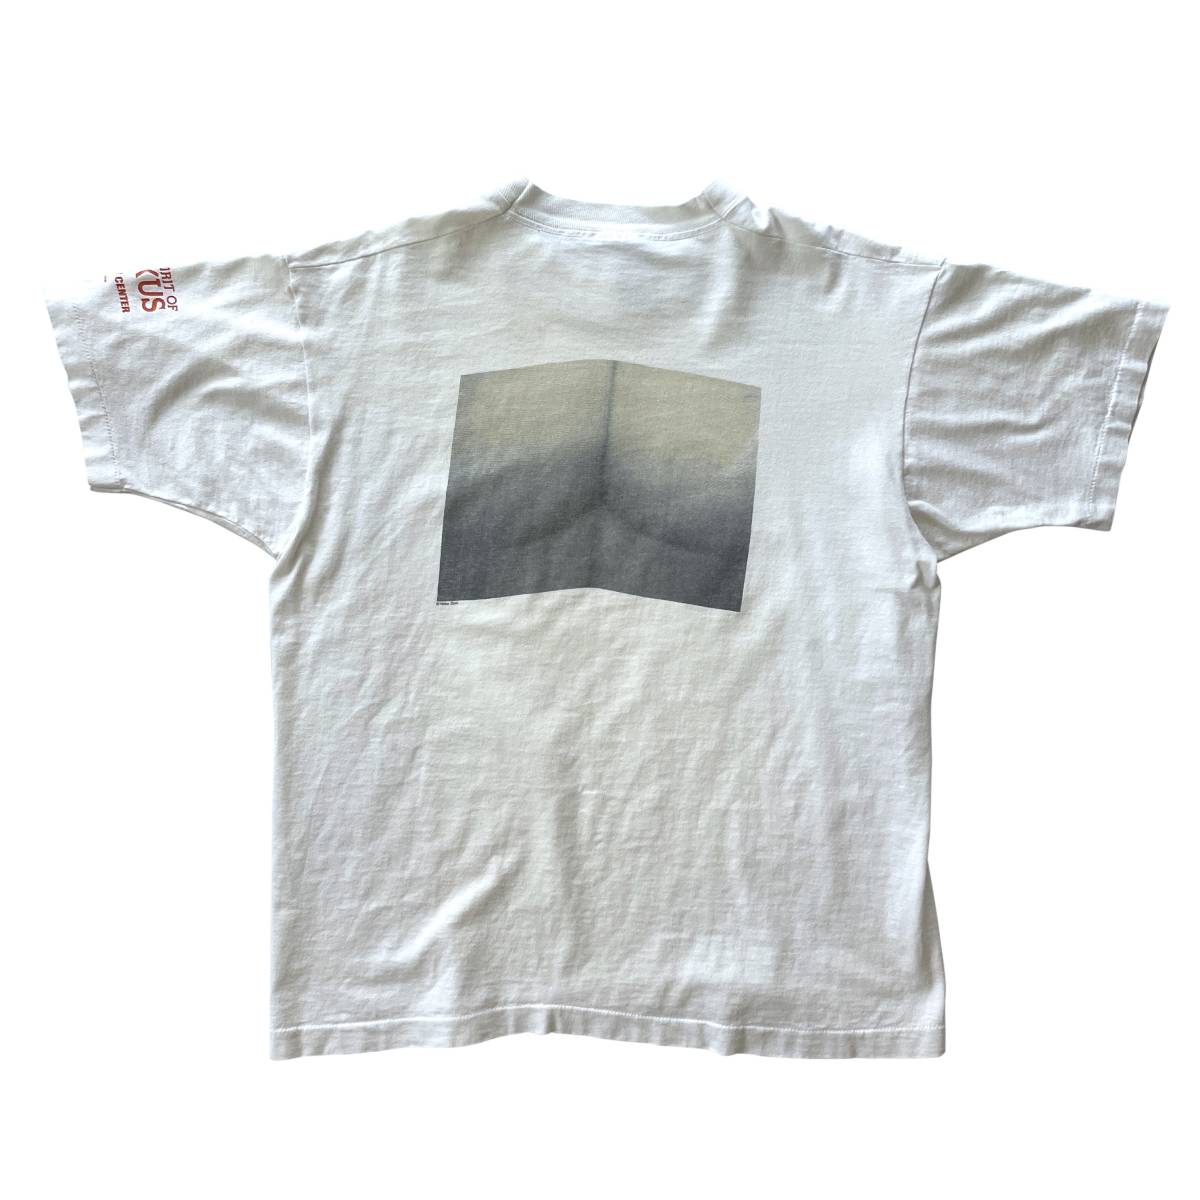 【Vintage】YOKO ONO Tシャツ IN THE SPIRIT OF FLUXUS オノ・ヨーコ A Celebration of Being Human フルクサス Walker Art Center 1993年